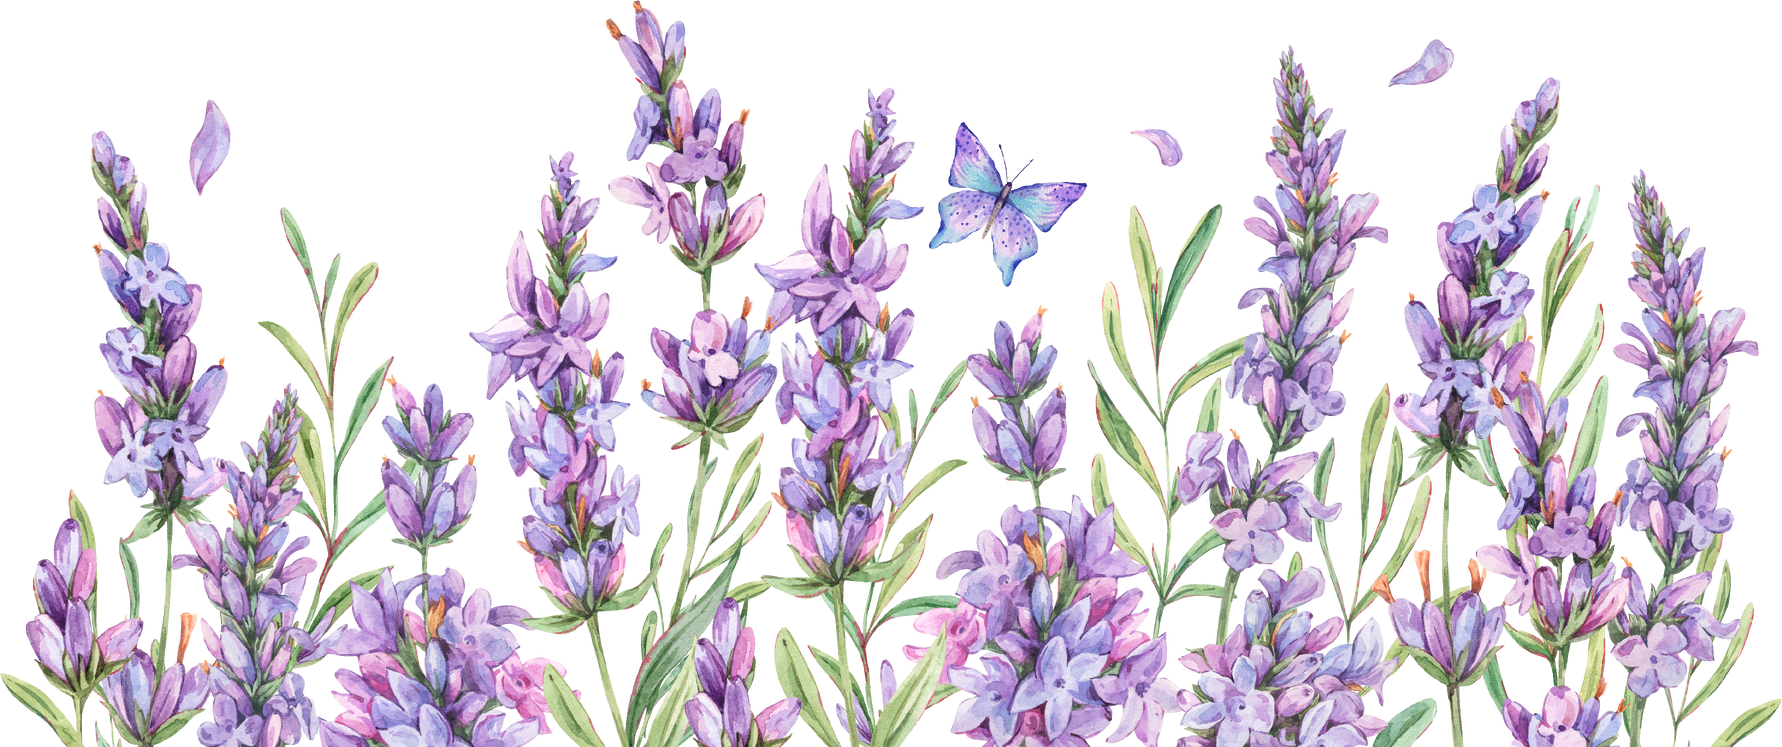 Watercolor lavender summer flowers